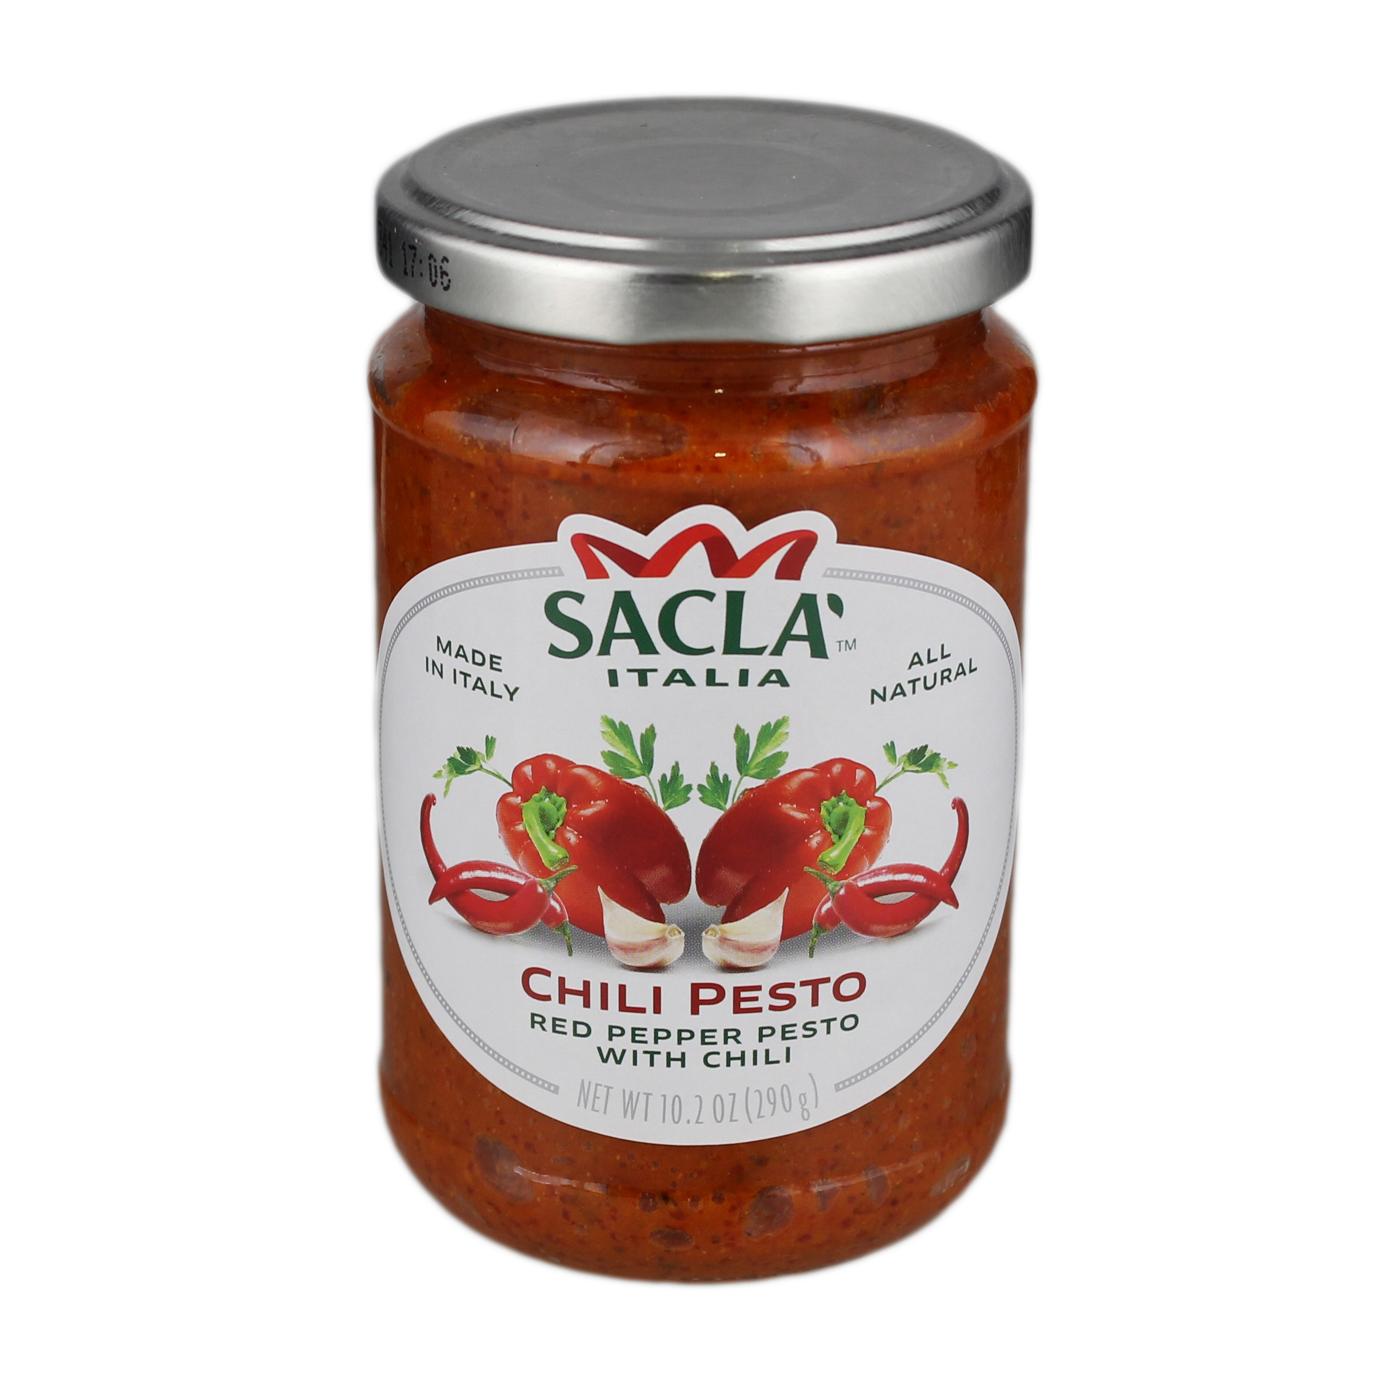 Sacla Red Pepper Chili Pesto; image 1 of 2